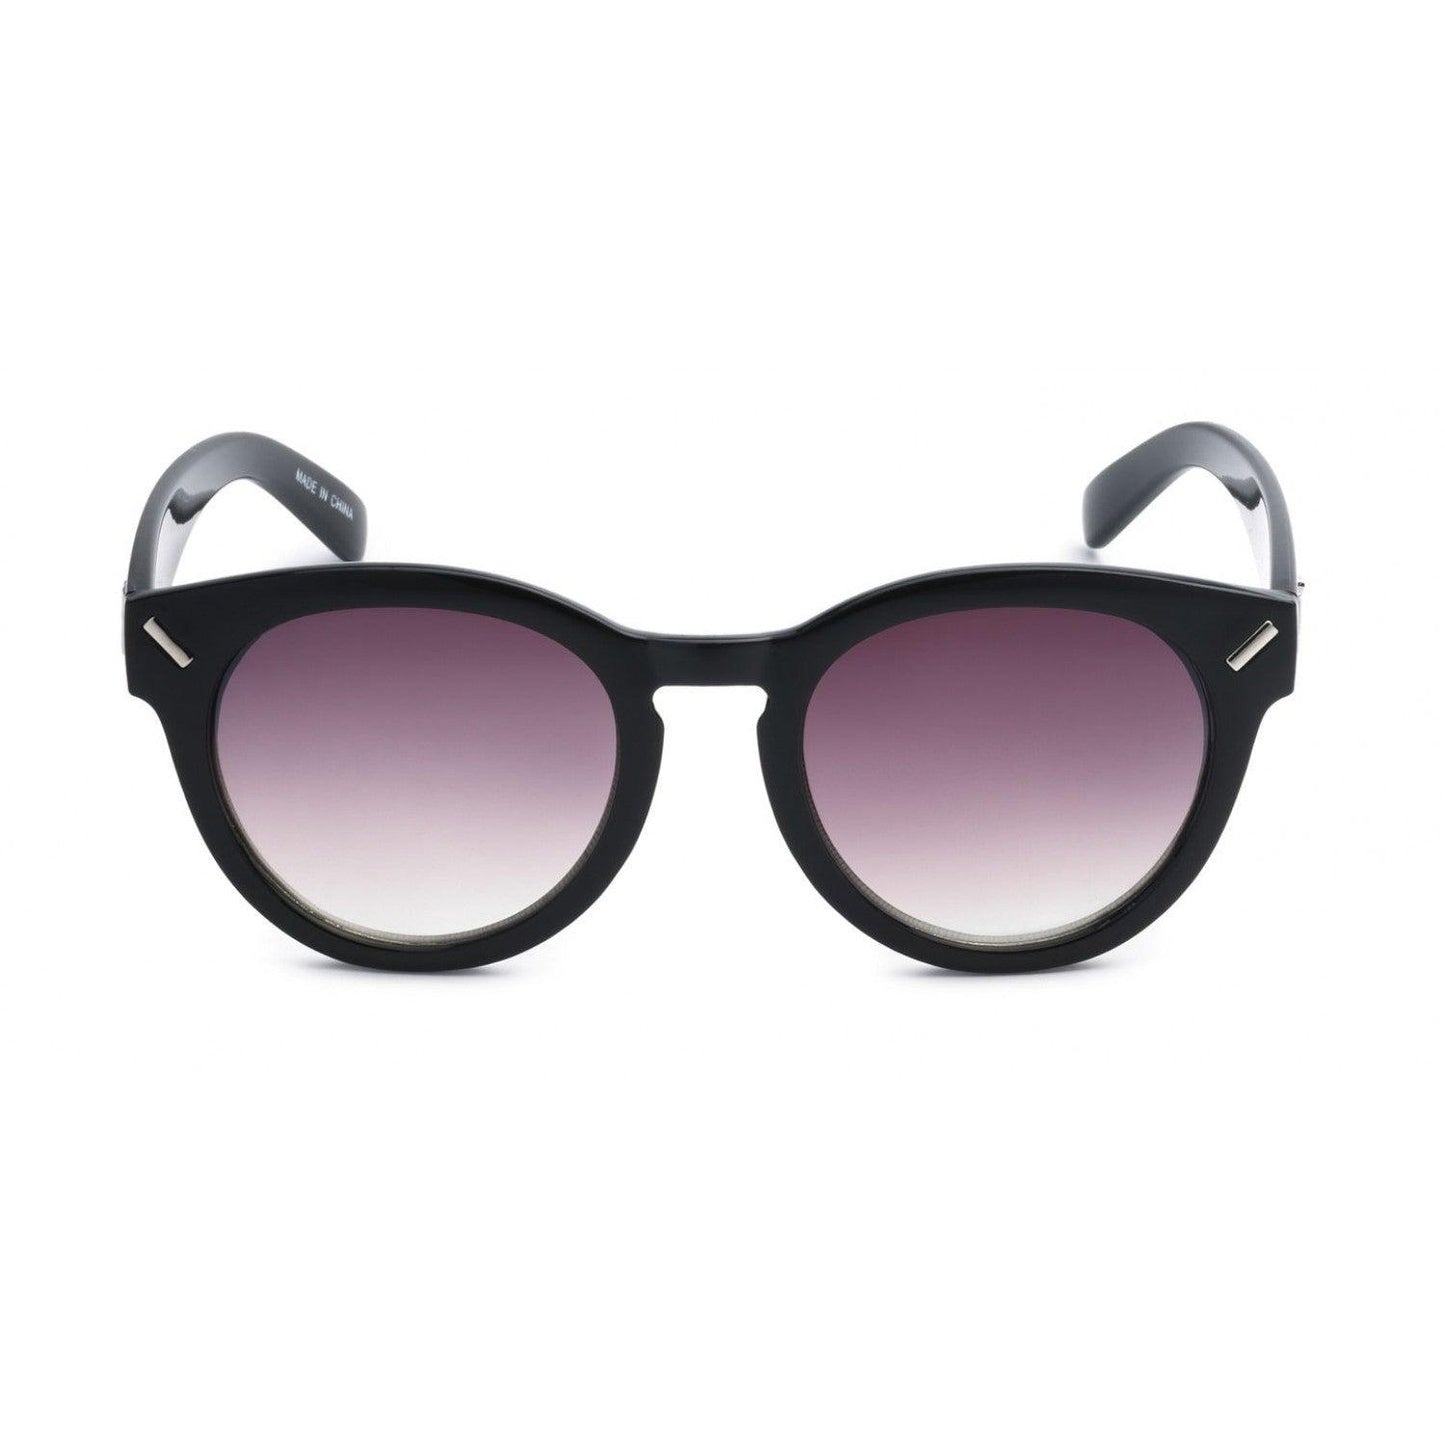 Simple Round Sunglasses - Weekend Shade Sunglasses